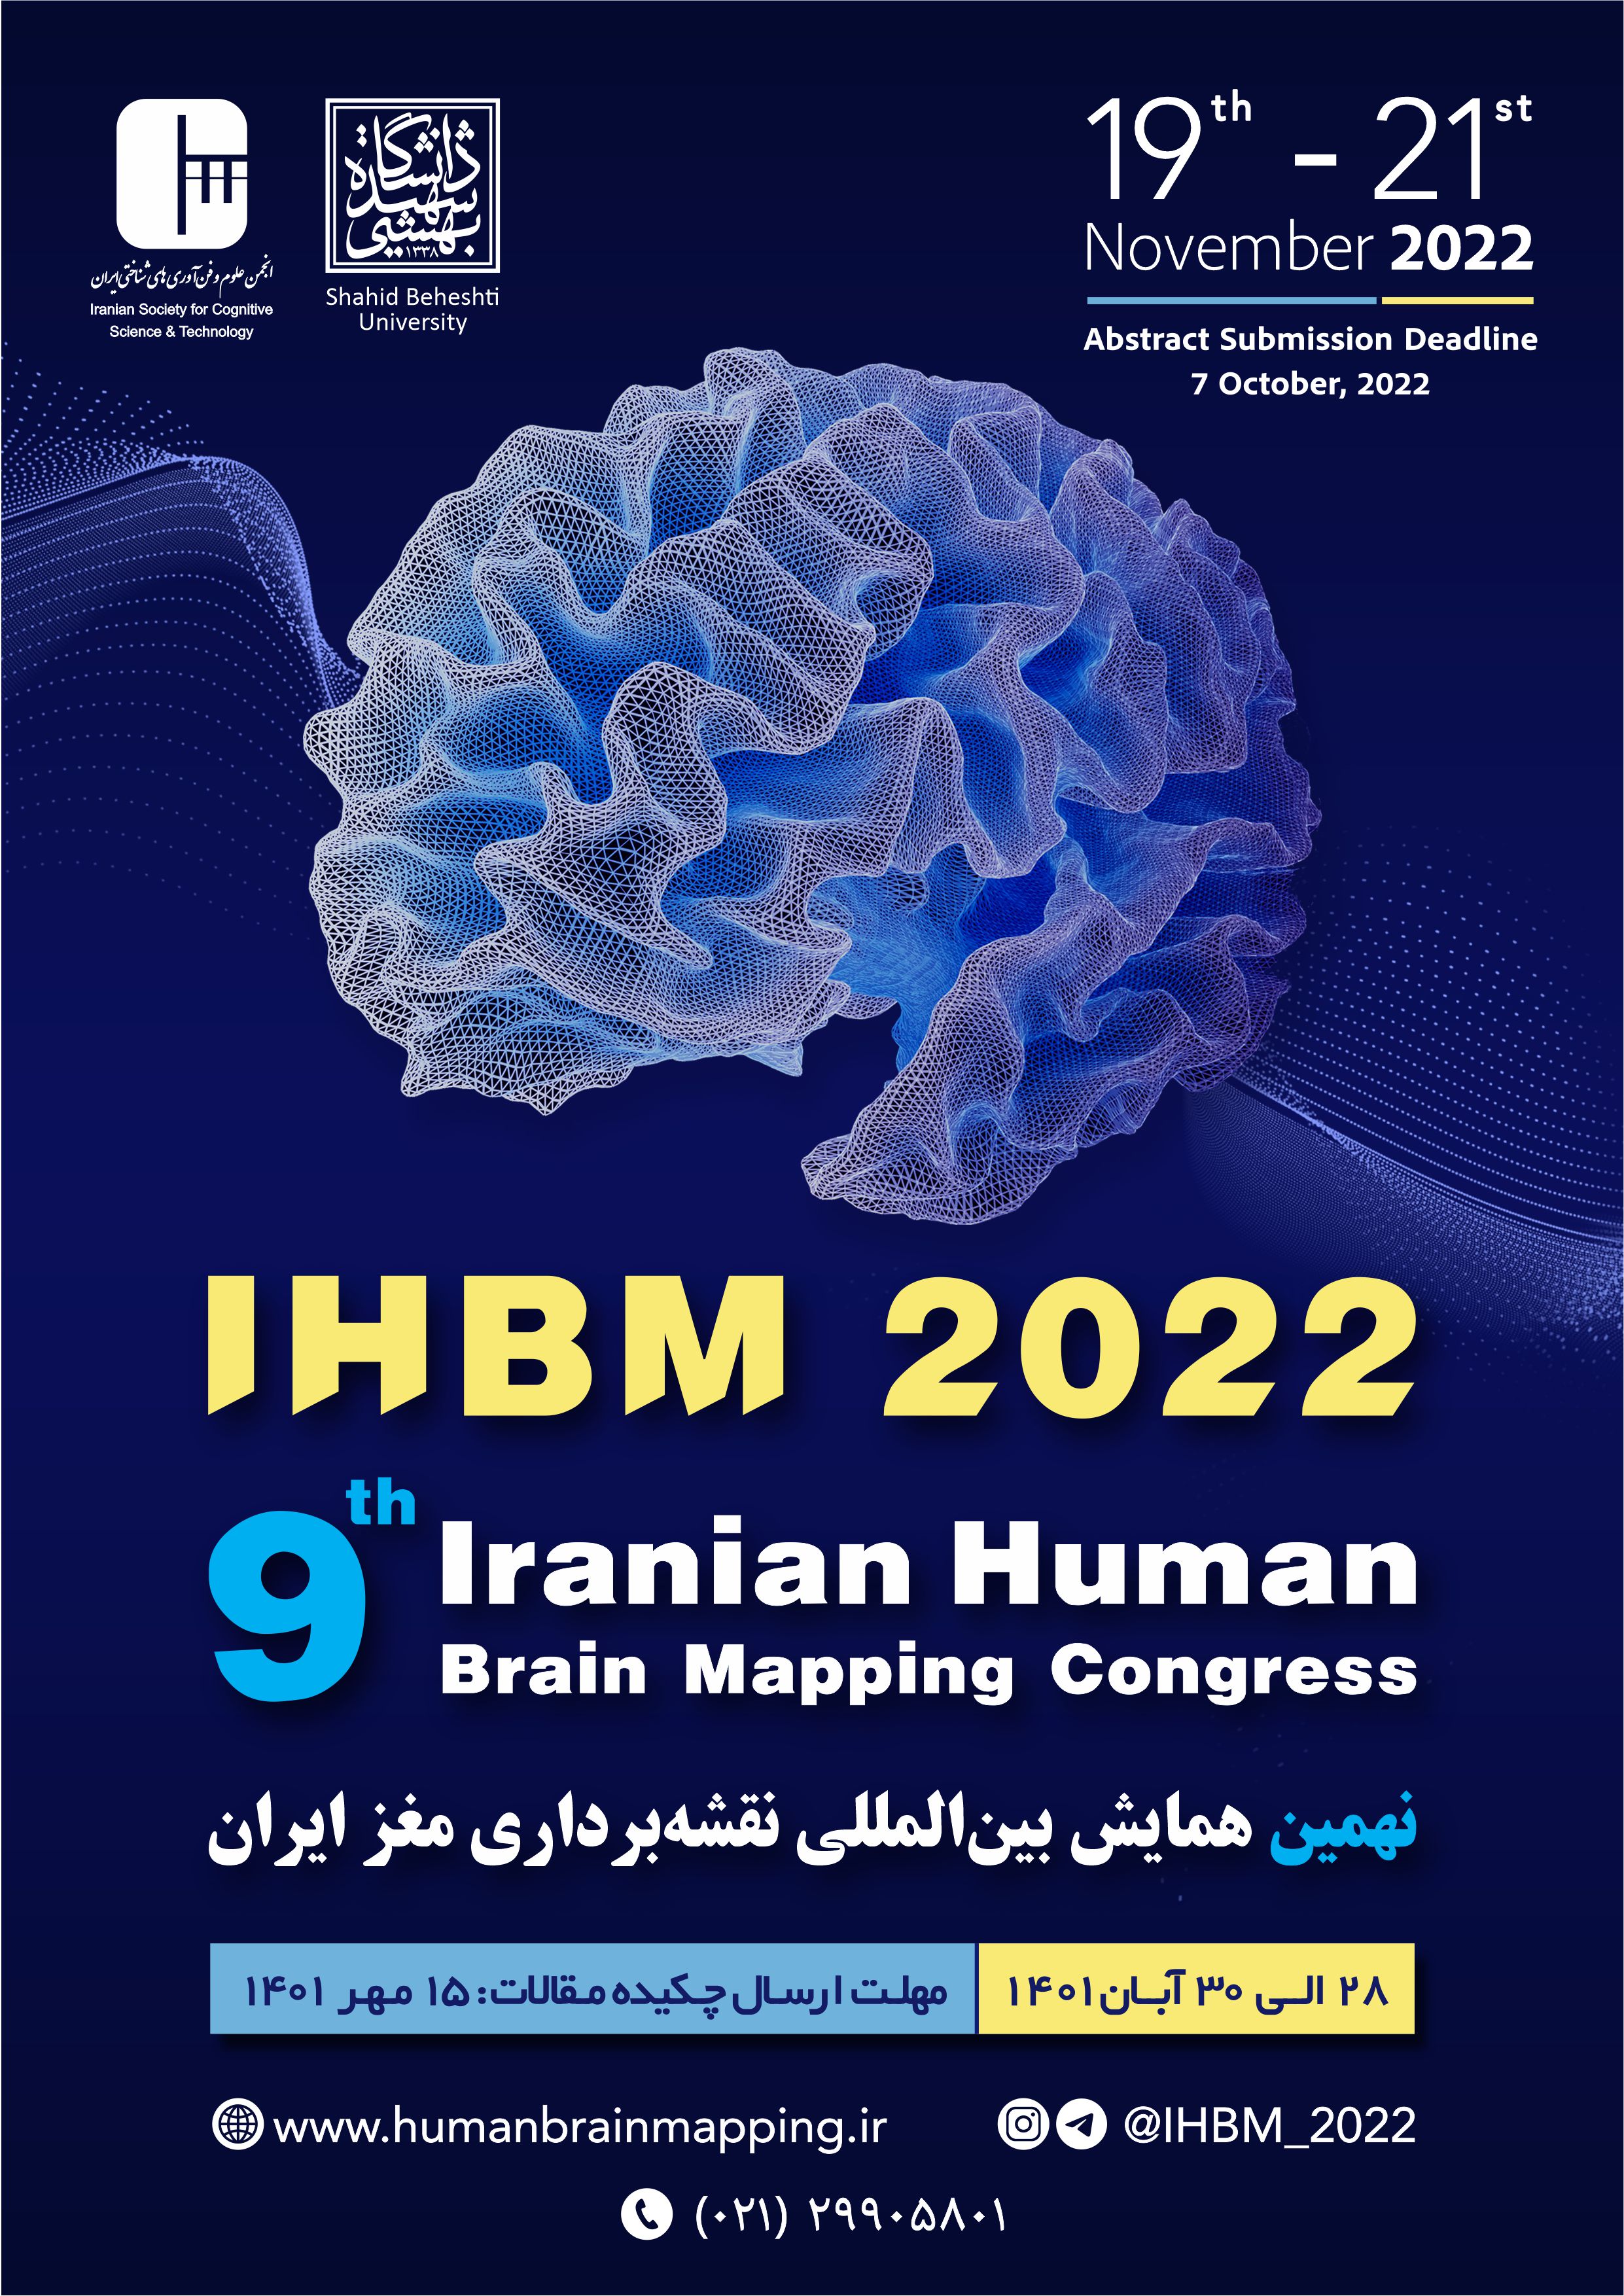 IHBM 2022 Poster